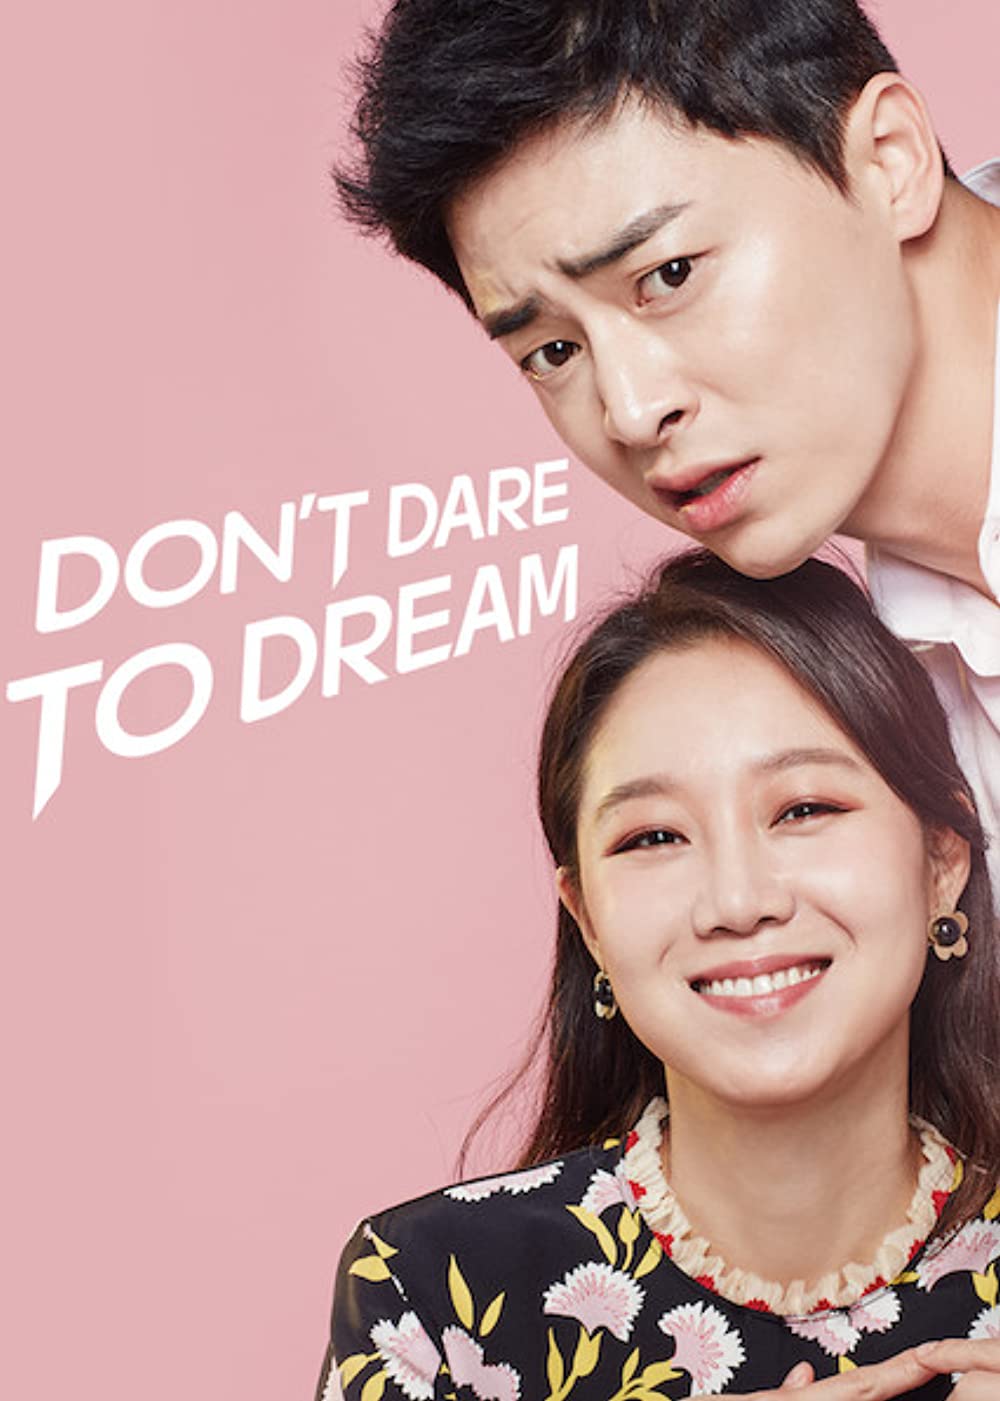 13 Drama Korea Netflix terbaik, dari genre thriller hingga romantis